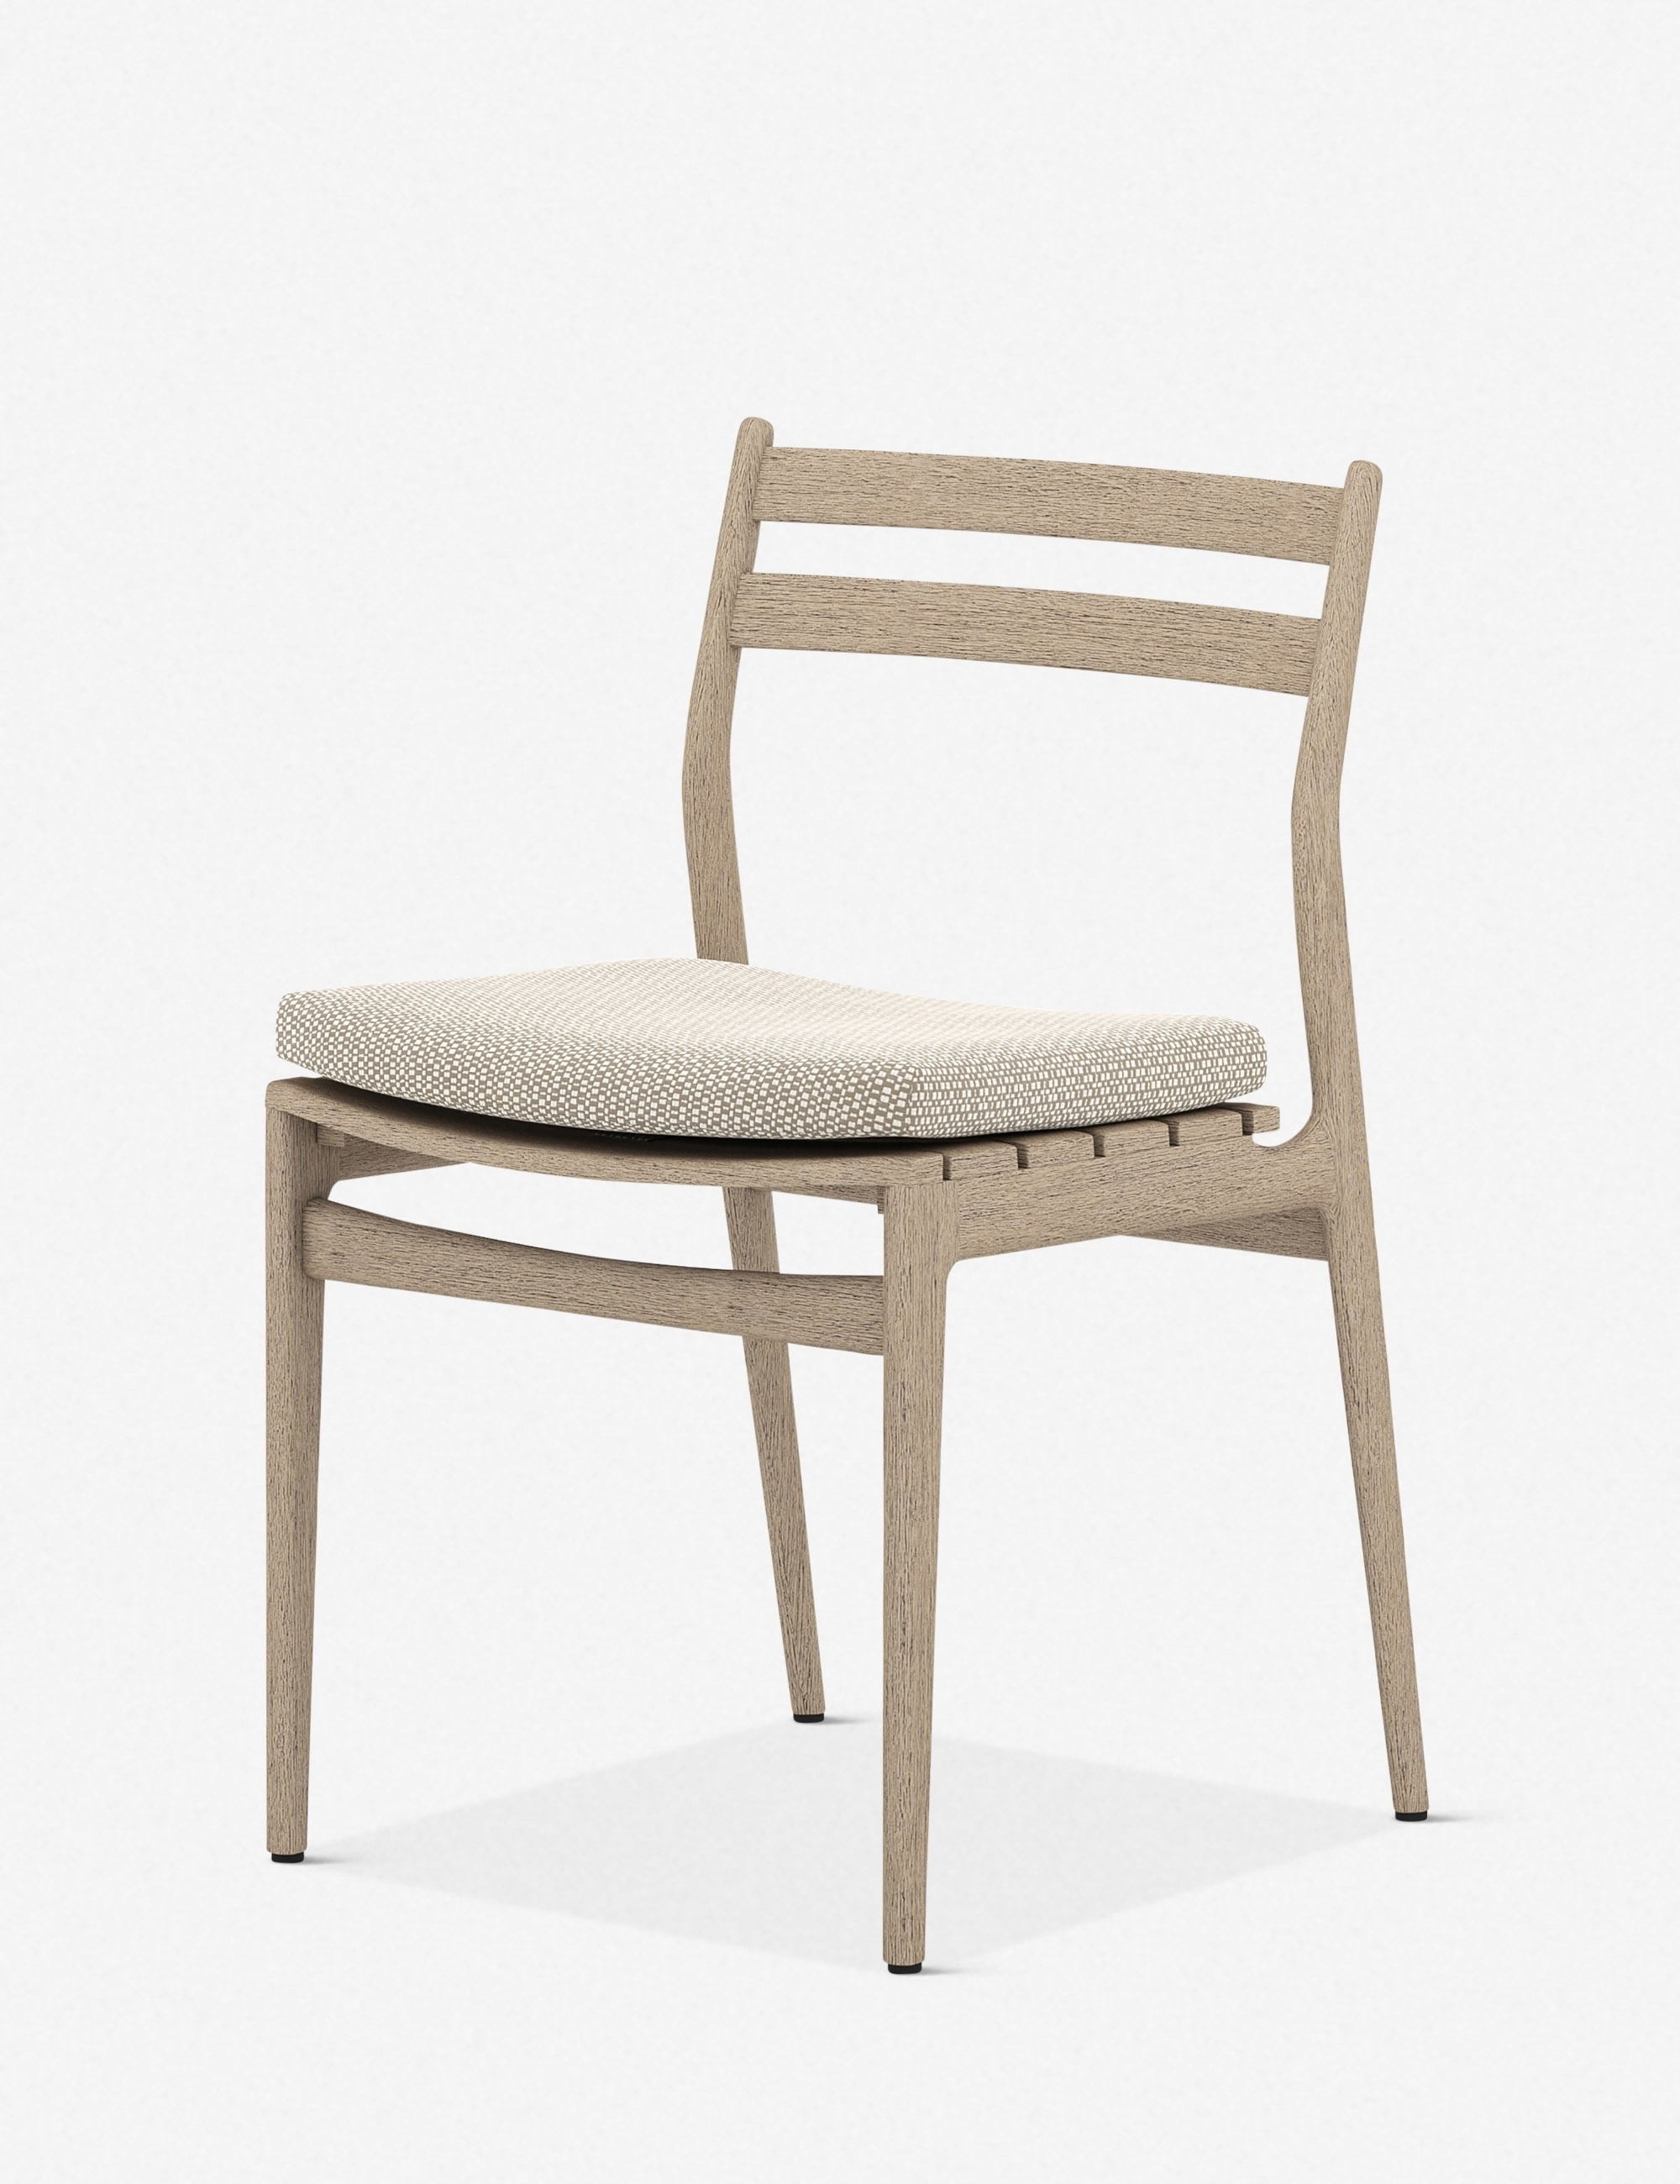 Oleena Outdoor Dining Chair - Image 1